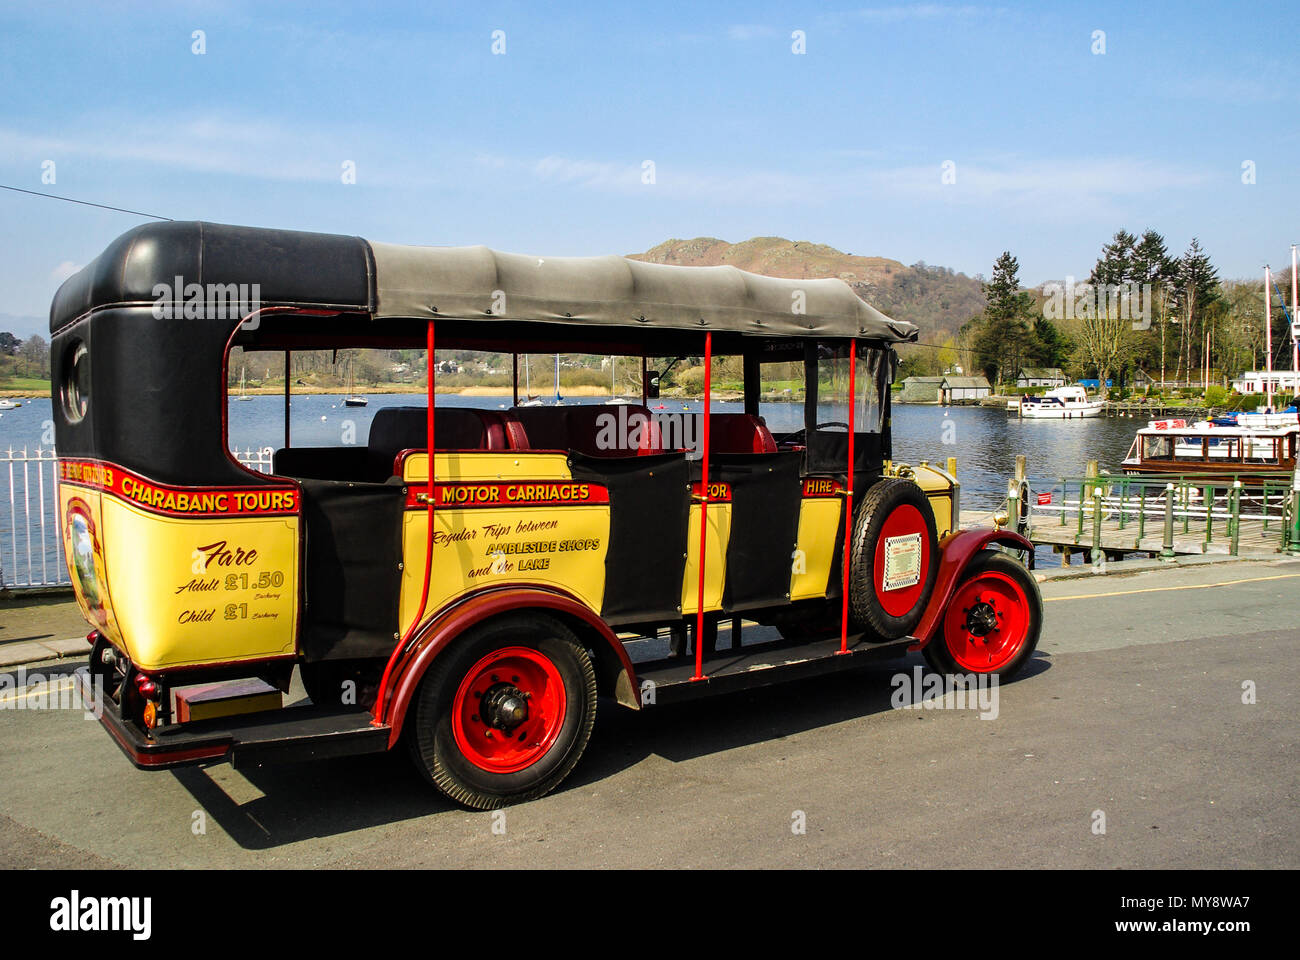 Charabanc Tours Motor Carriages vintage bus at Waterhead, Ambleside, on Windermere lake, Cumbria, UK. Classic vehicle Stock Photo